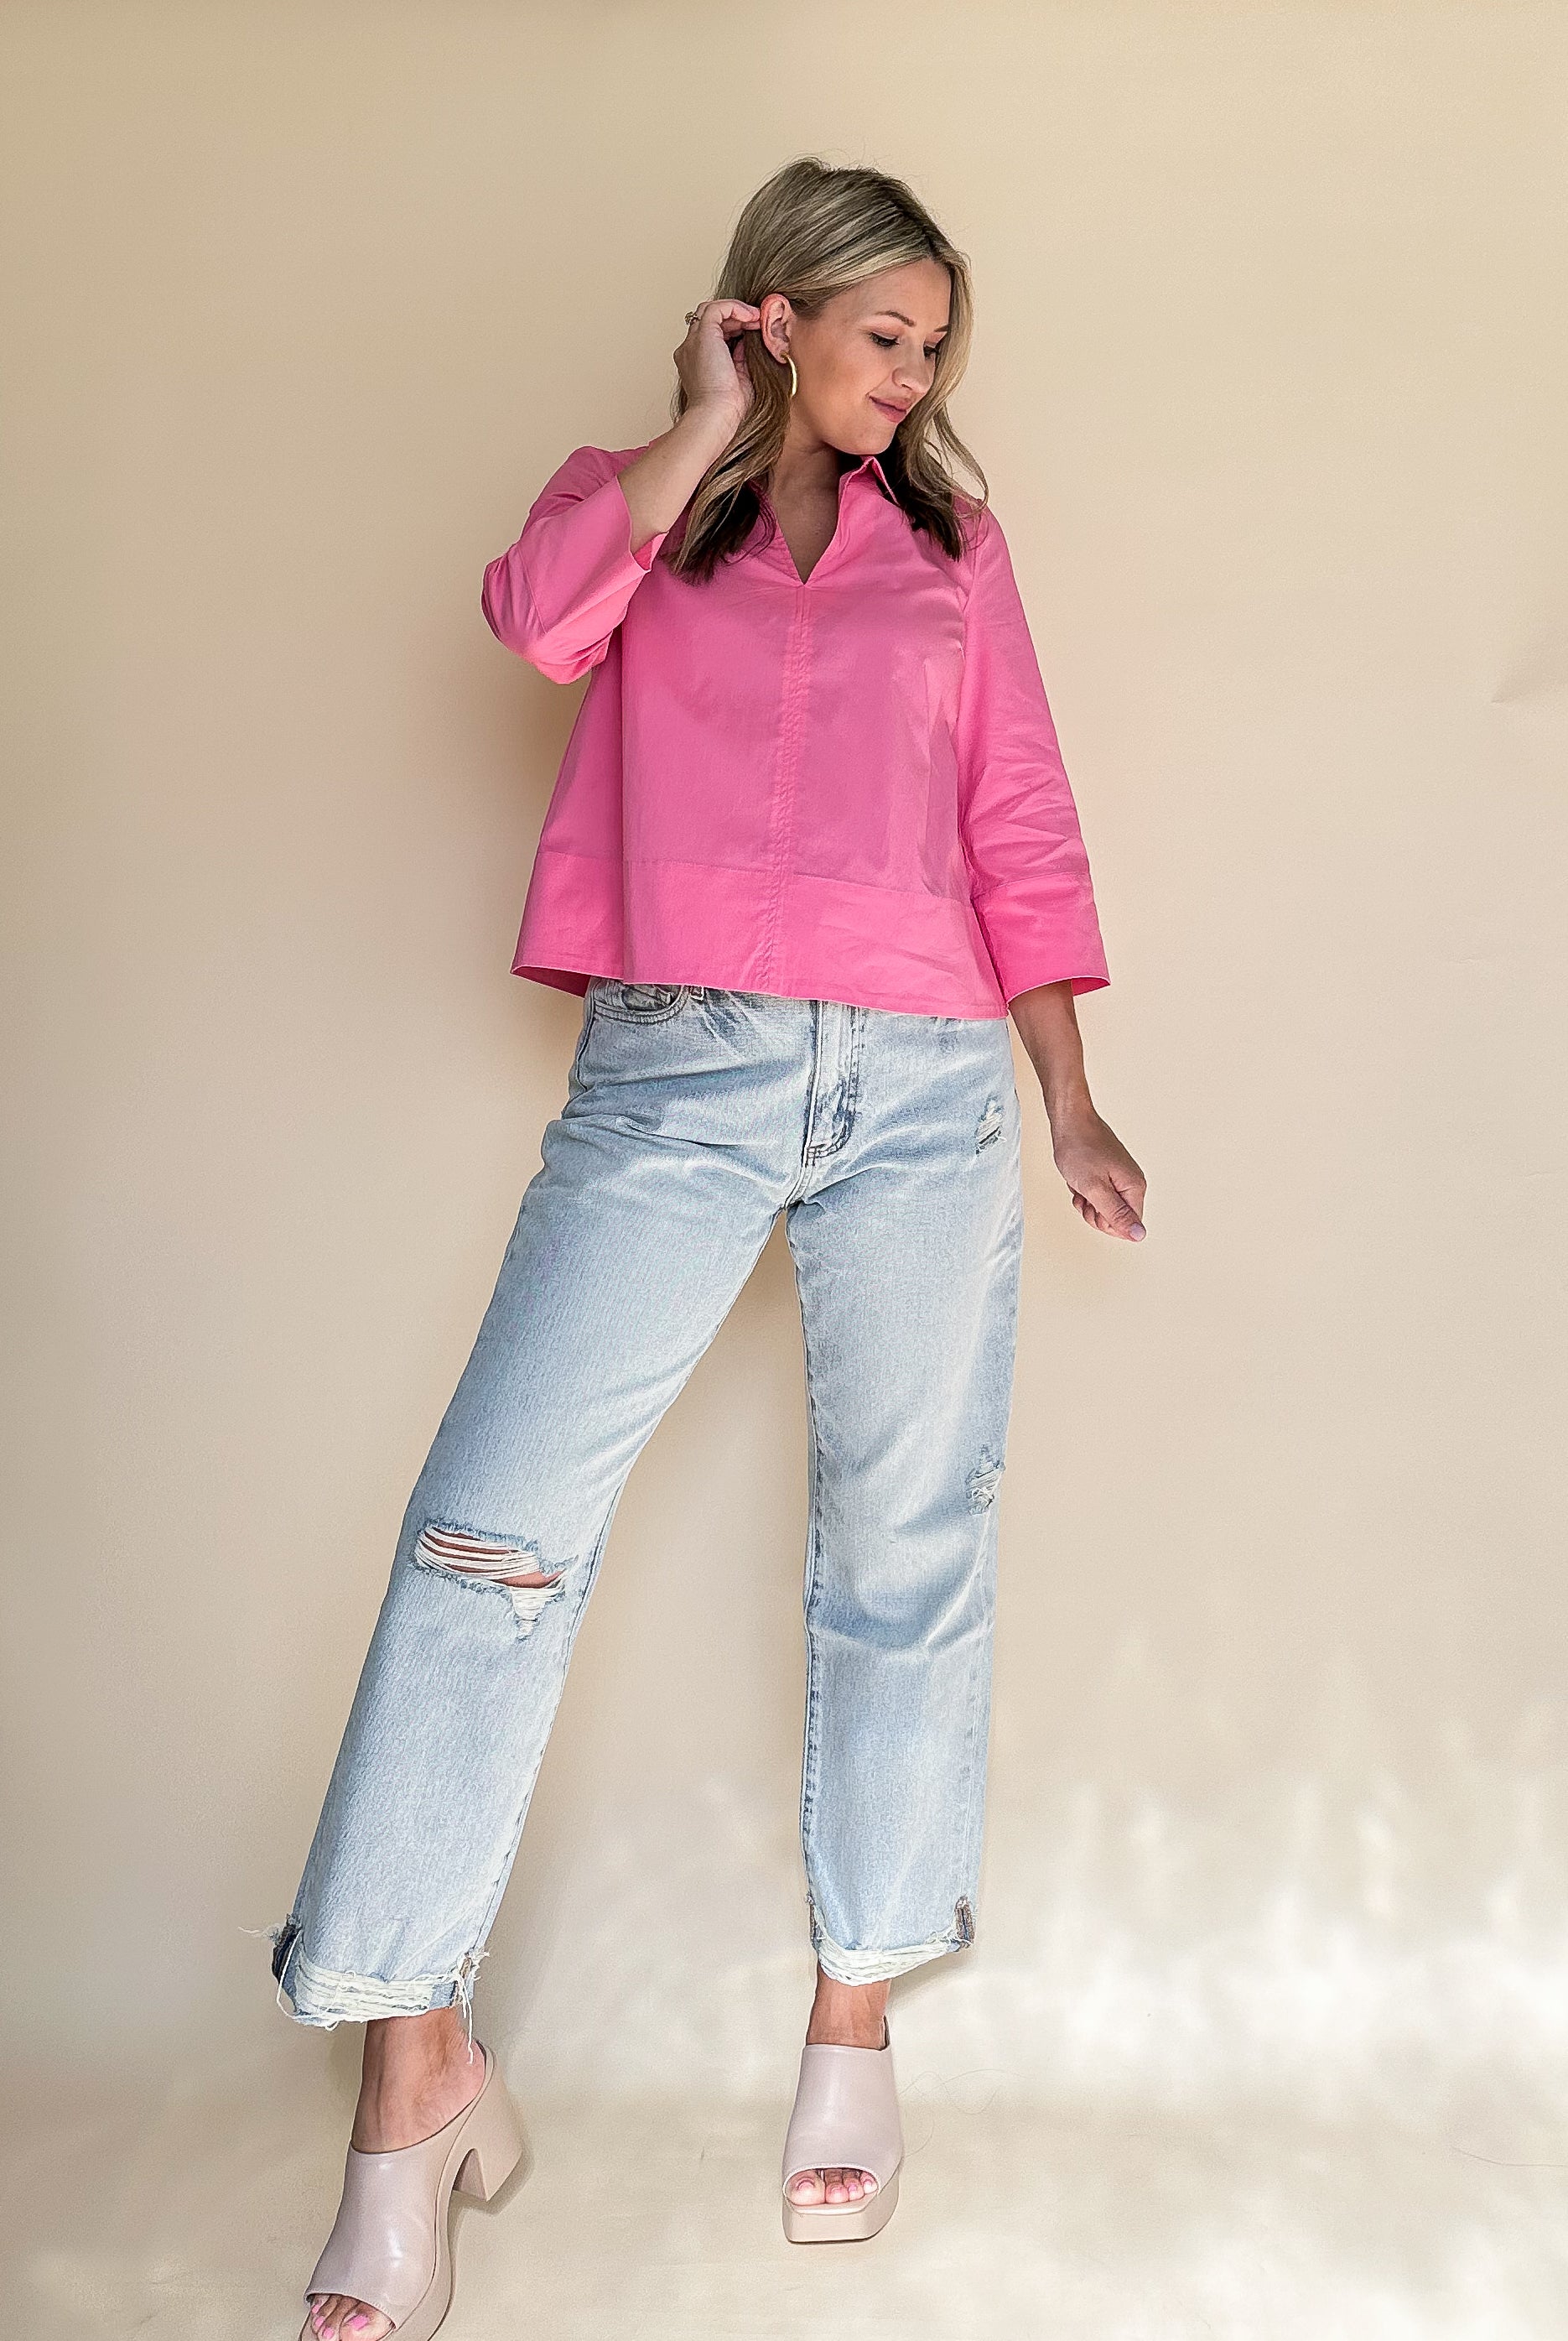 august apparel pink poplin top